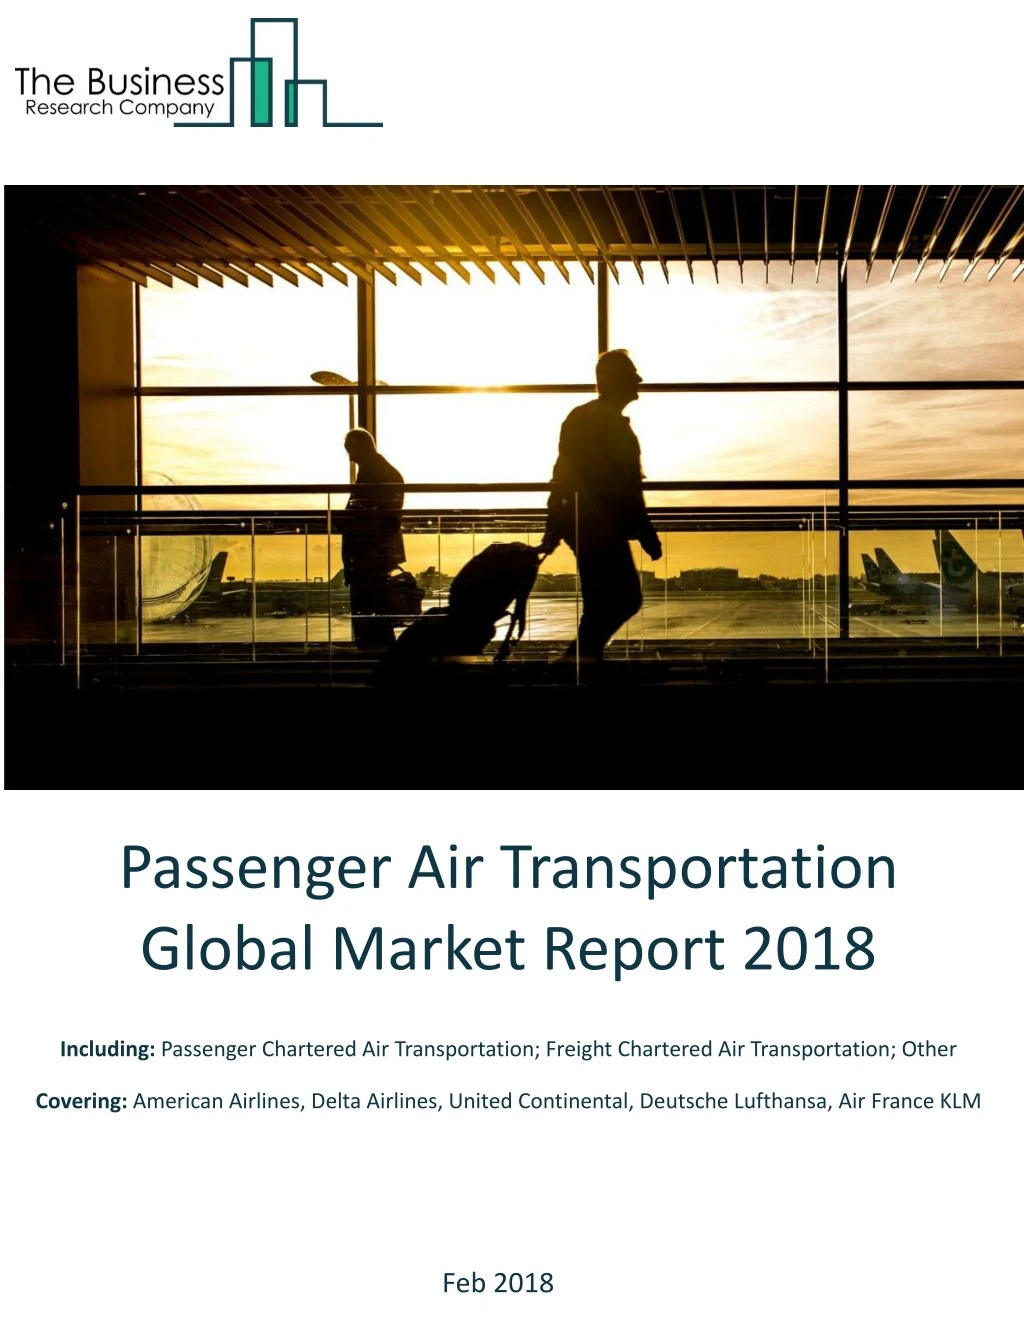 passenger air transportation global market report